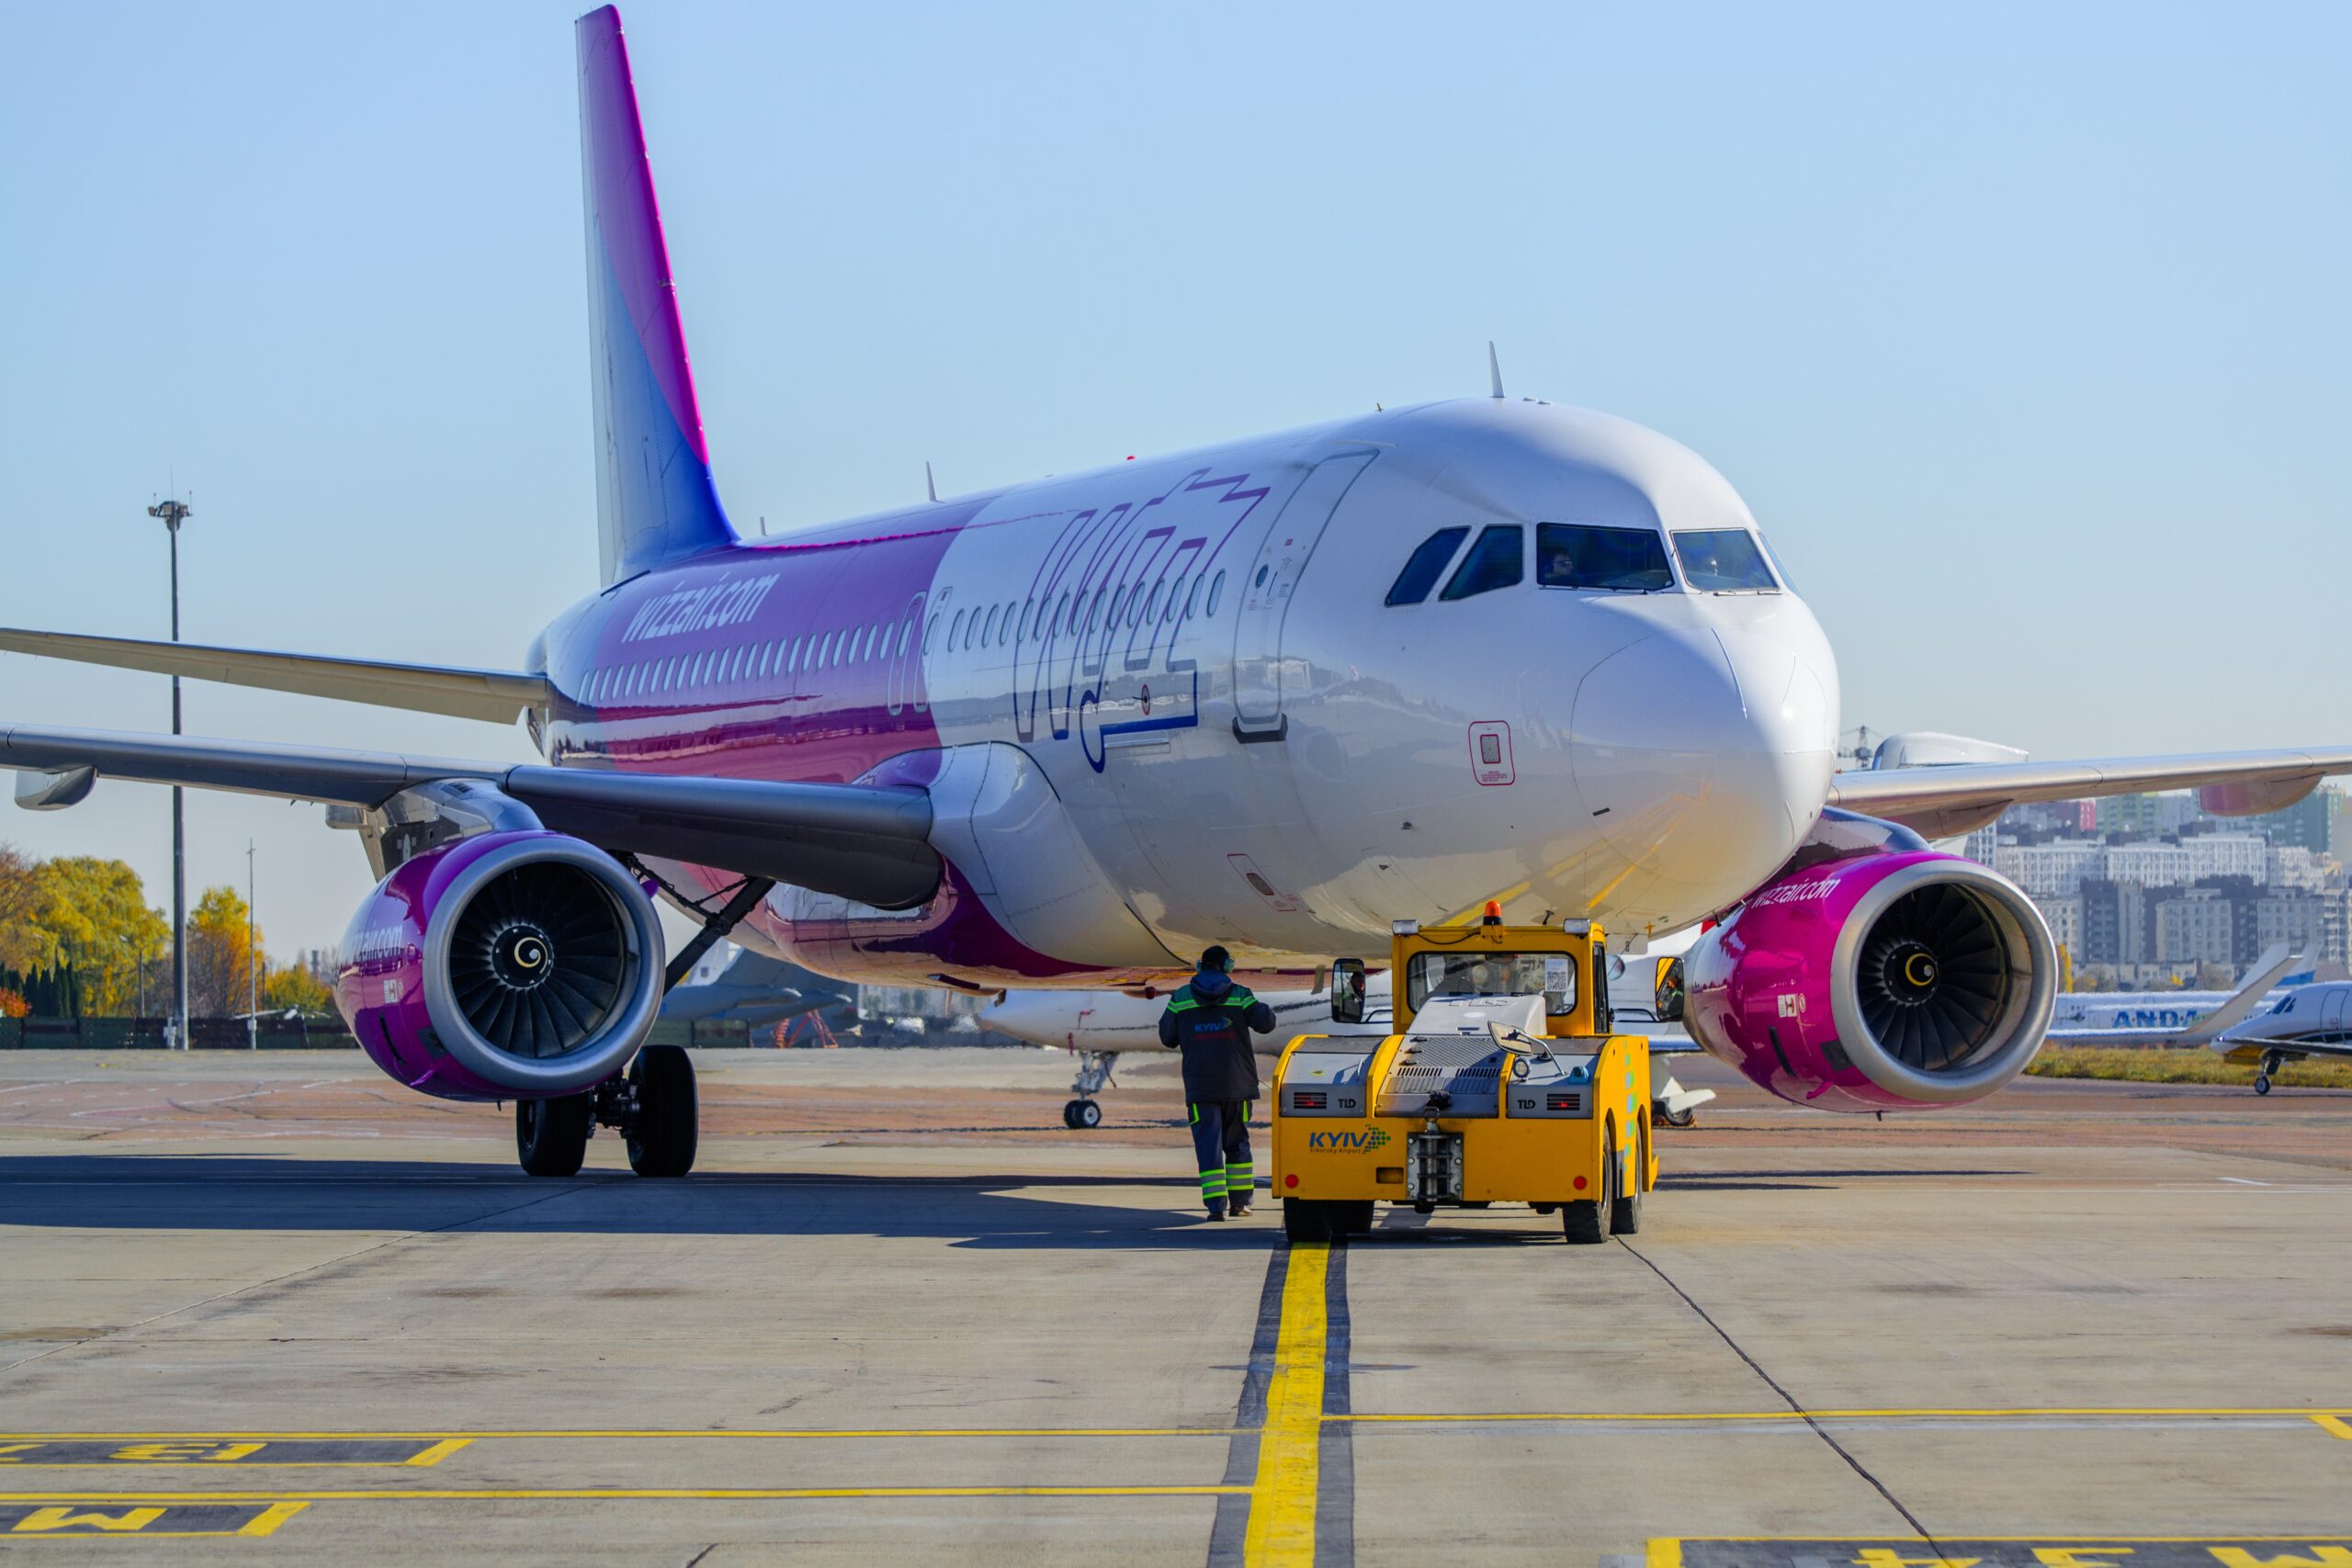 WizzAir's A320 pushing back in Kyiv Zhulyany airport